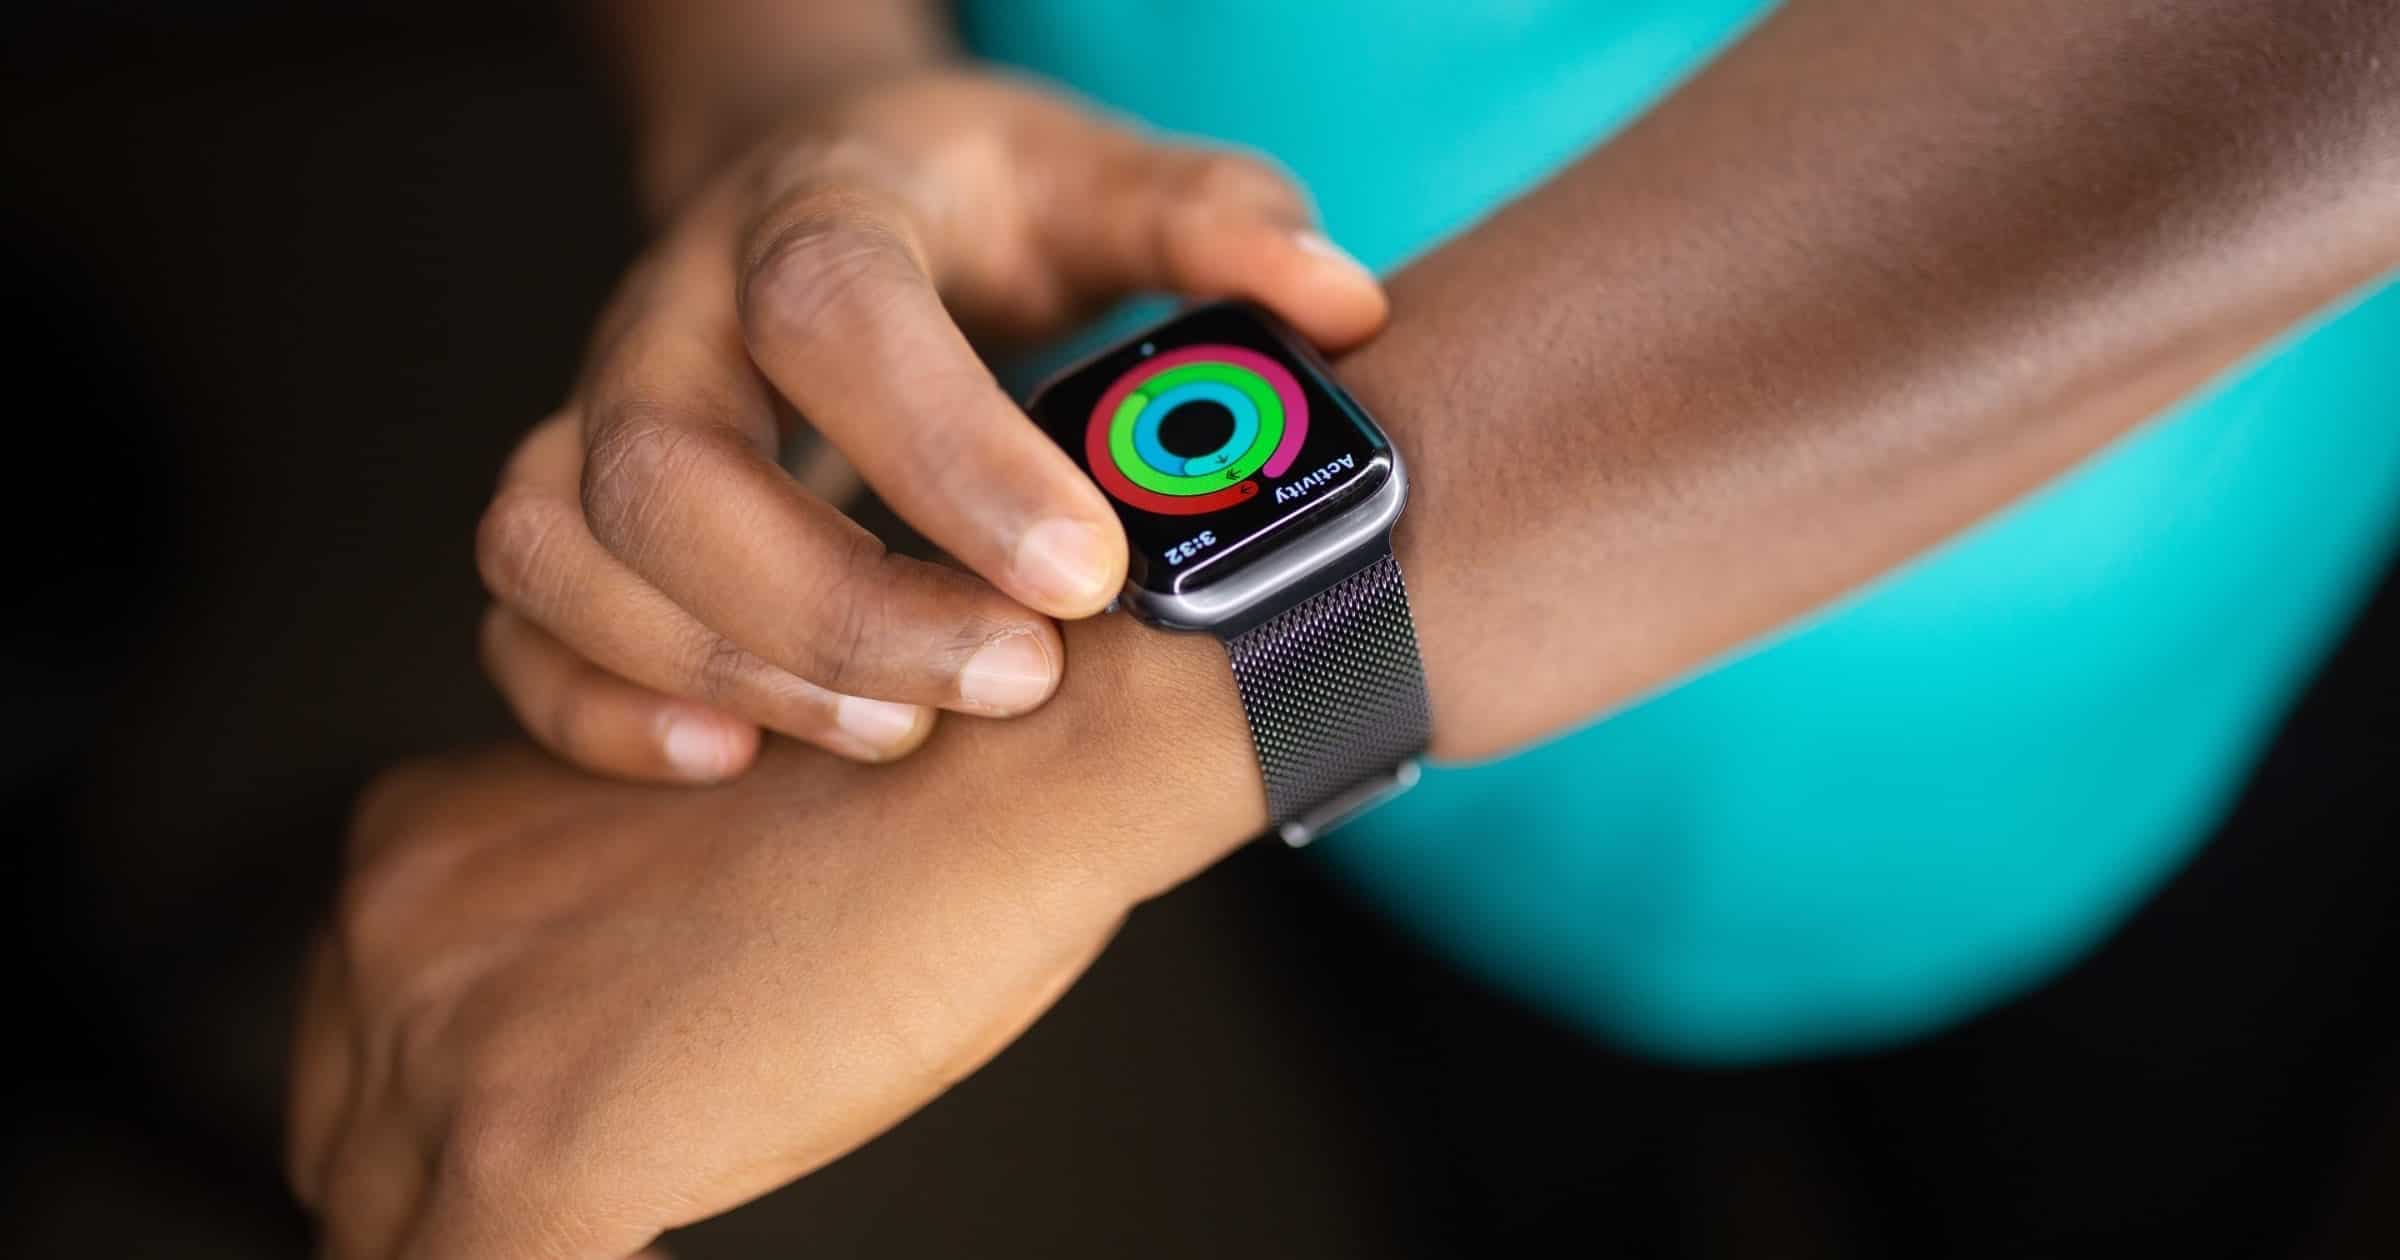 Apple Watch Fall Detection Saves Georgia Man’s Life